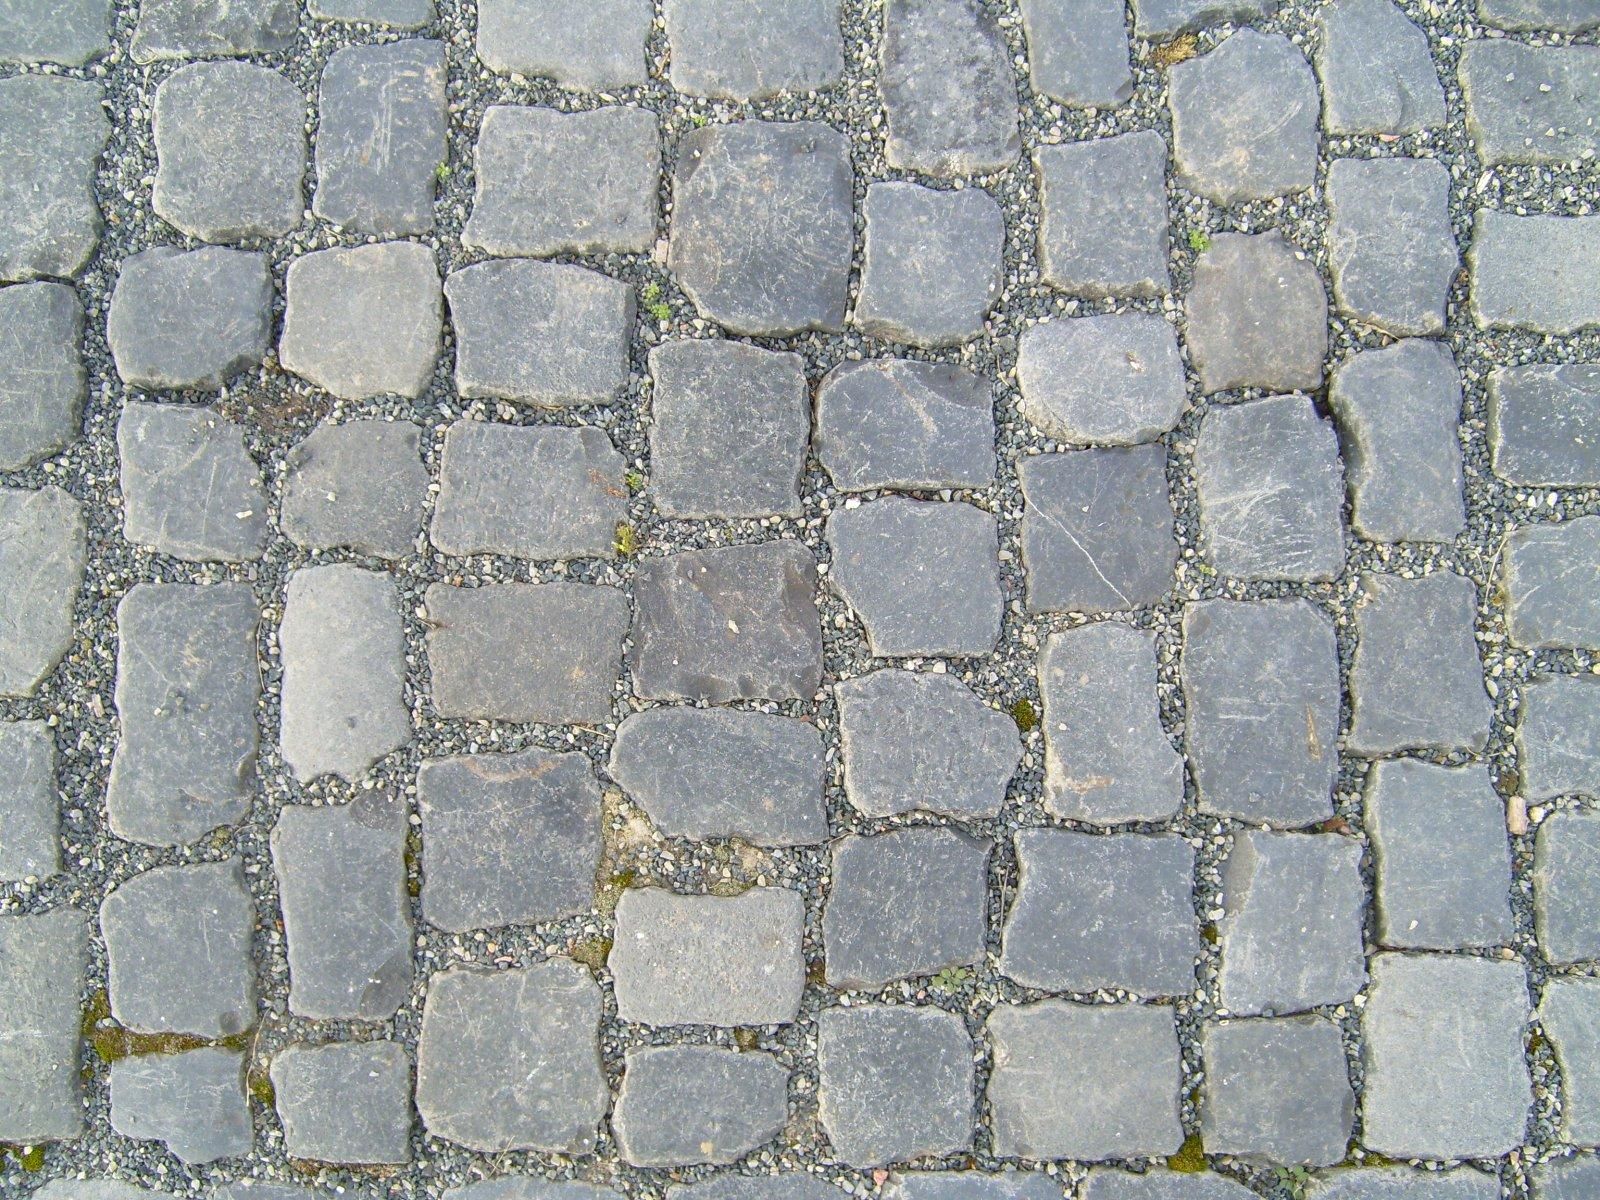 File:Cobbles grey.jpg - Wikimedia Commons